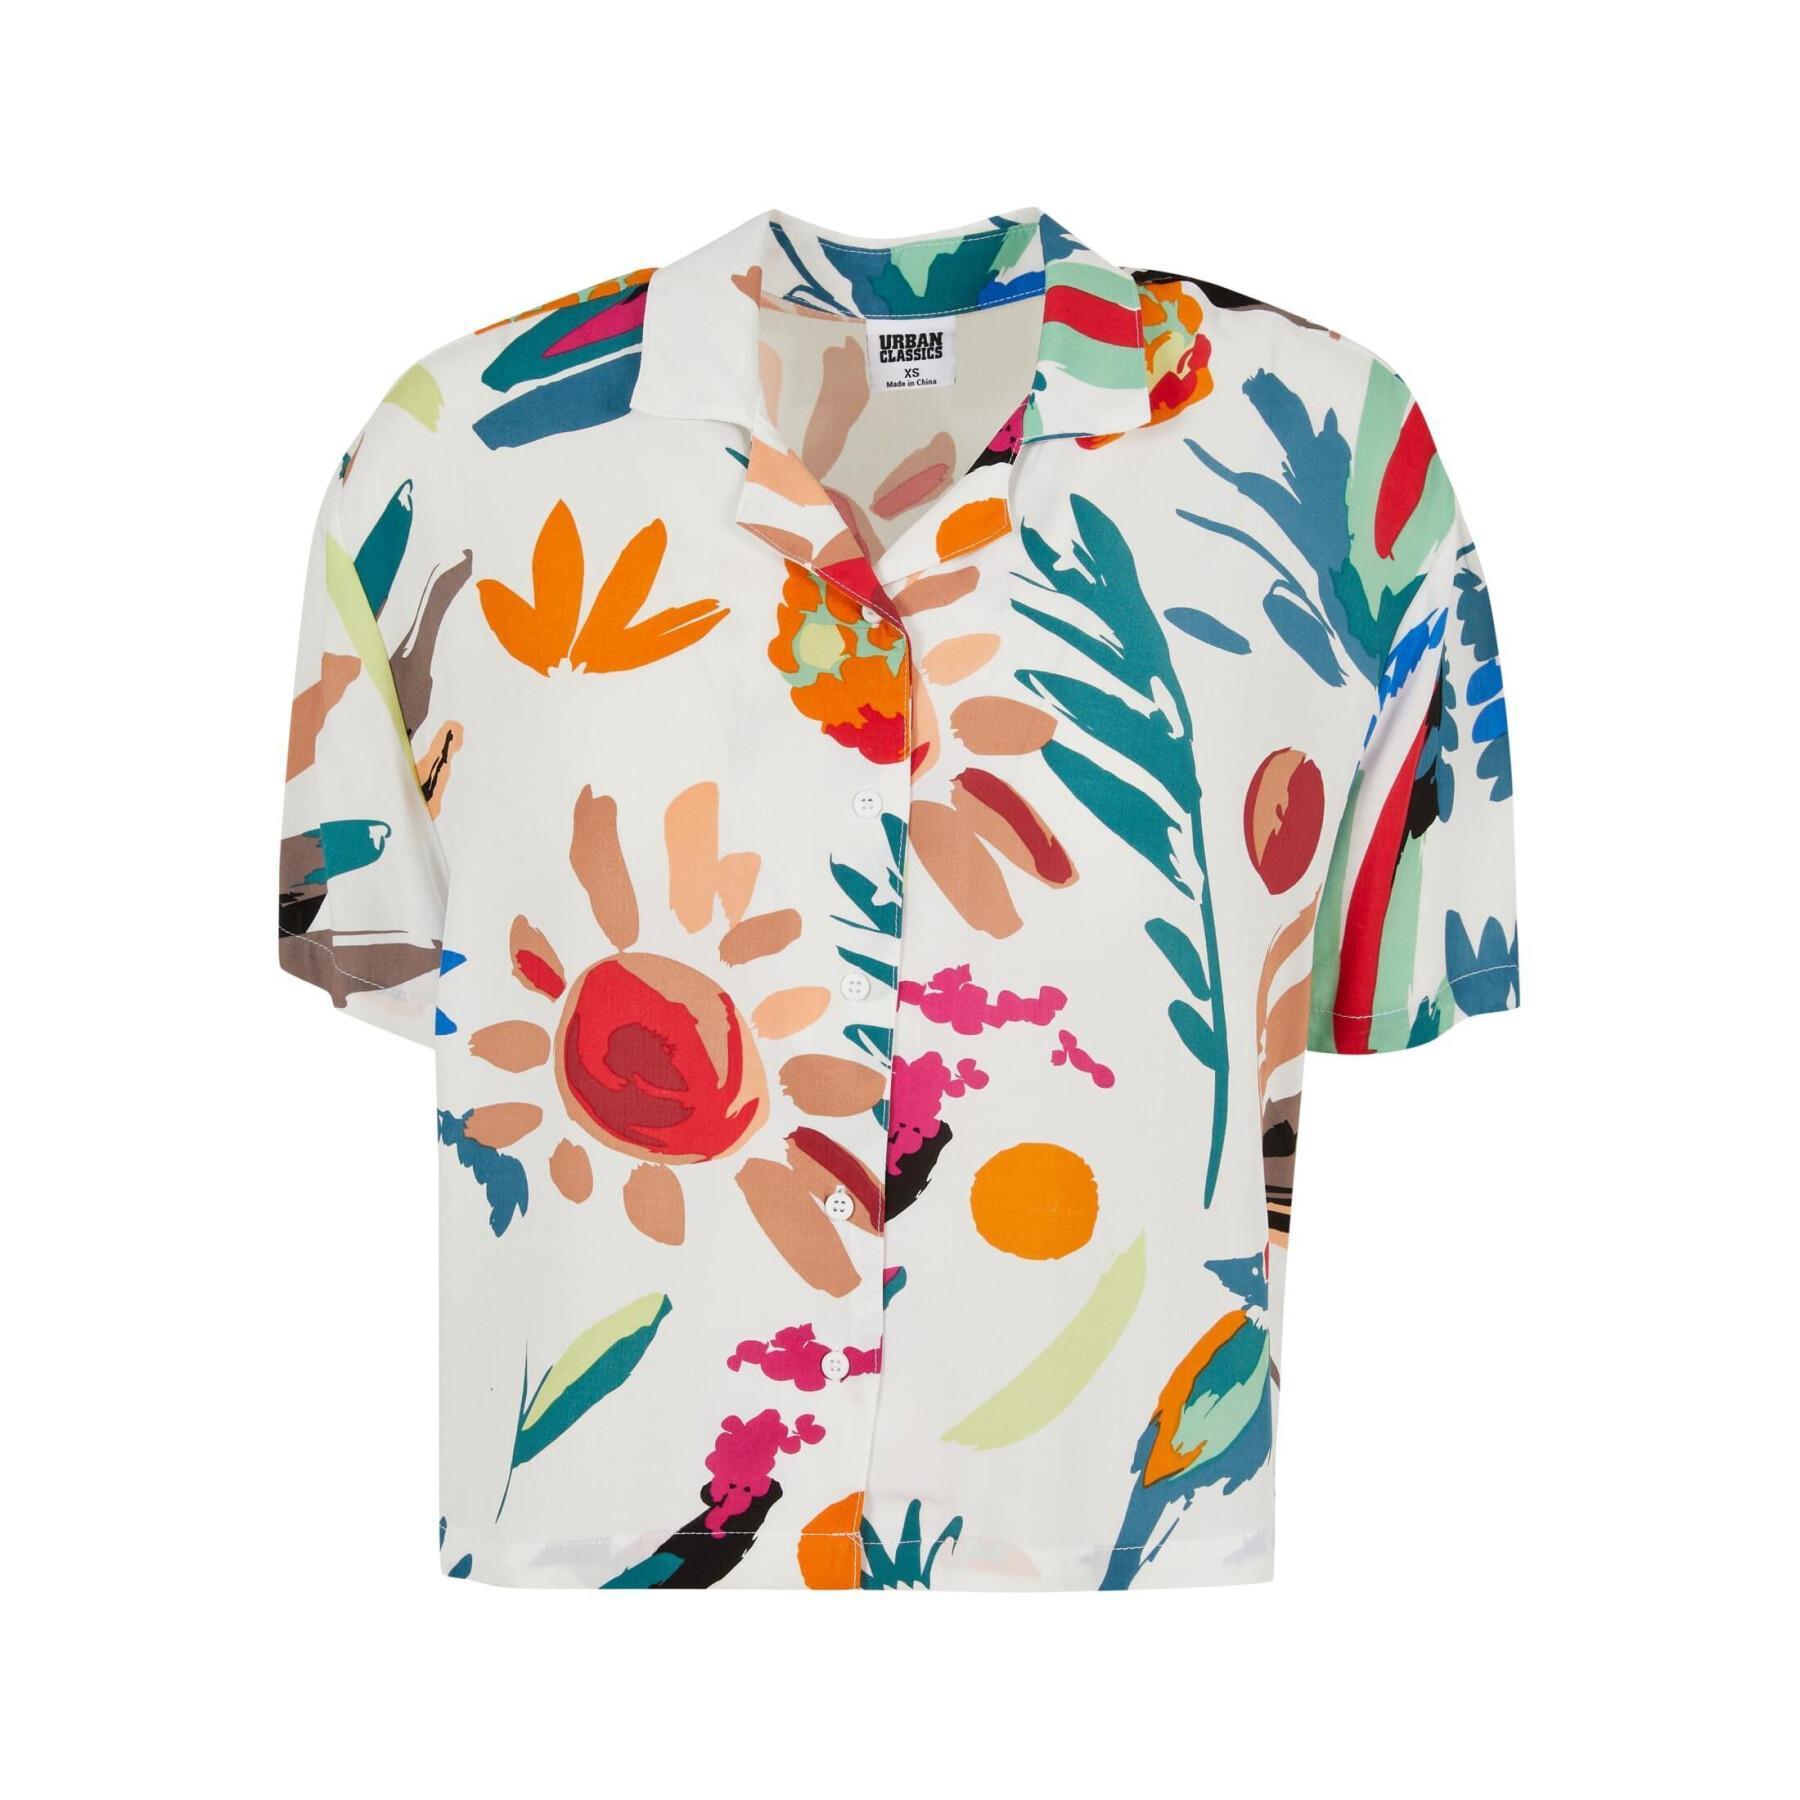 Camisa de mujer Urban Classics viscose resort - Camisas - Ropa de mujer